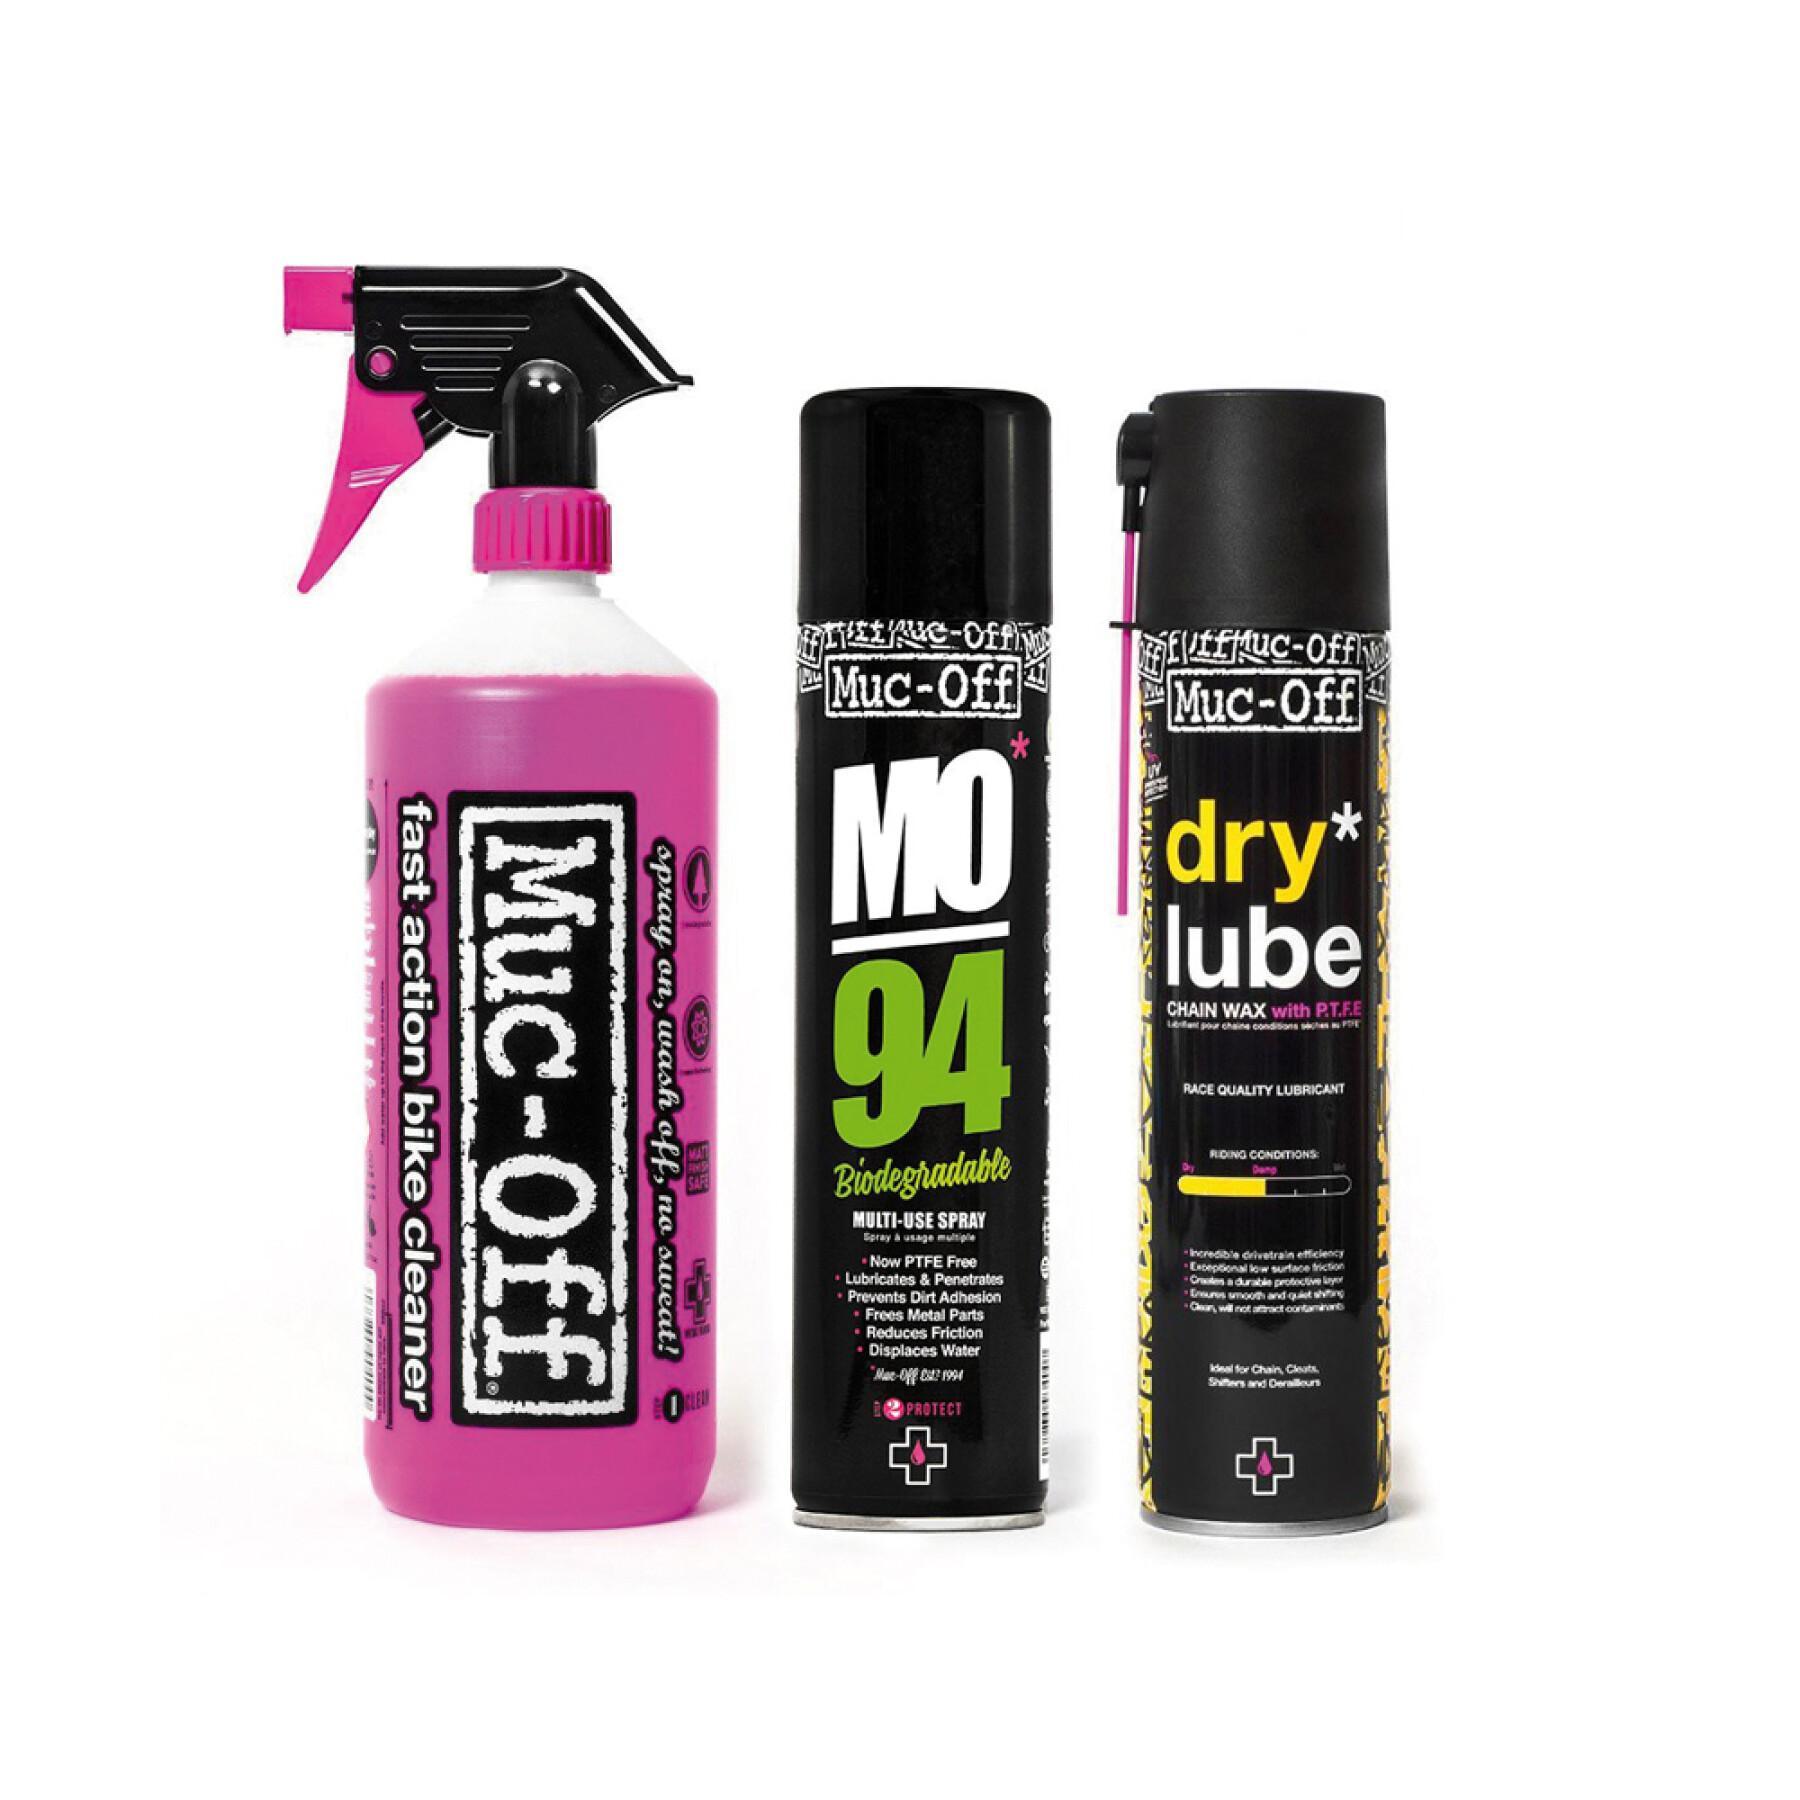 Reinigungspaket Muc-Off clean protect Lube kit wet